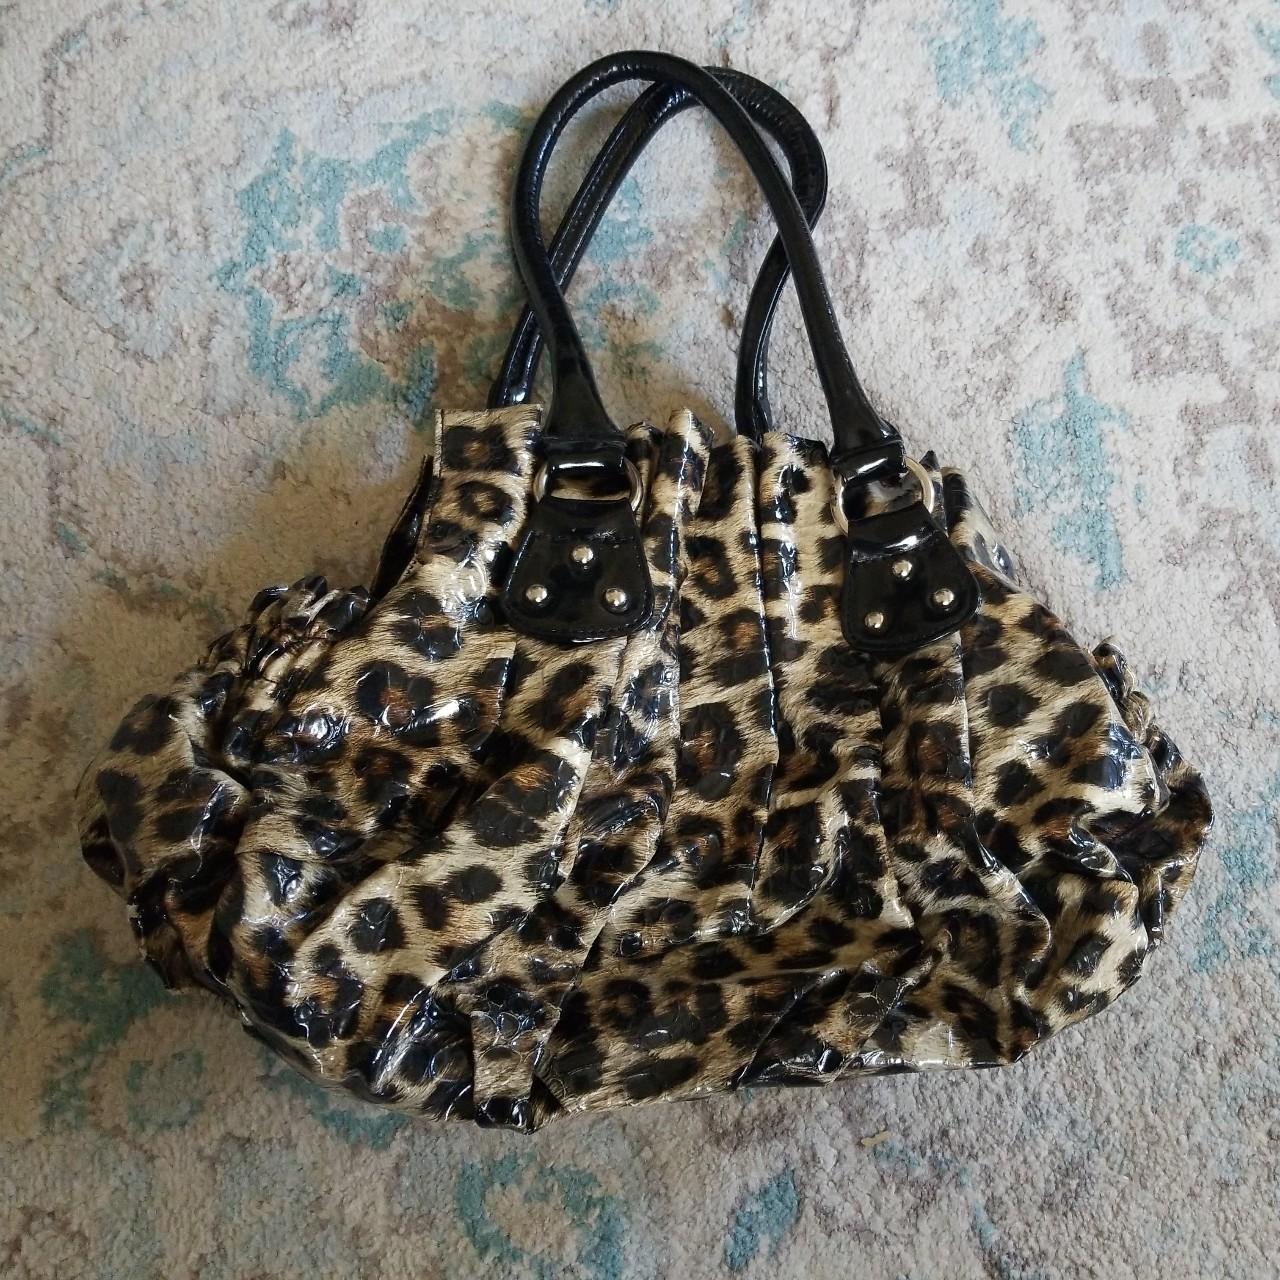 GUESS Animal Print Bags & Handbags for Women for sale | eBay